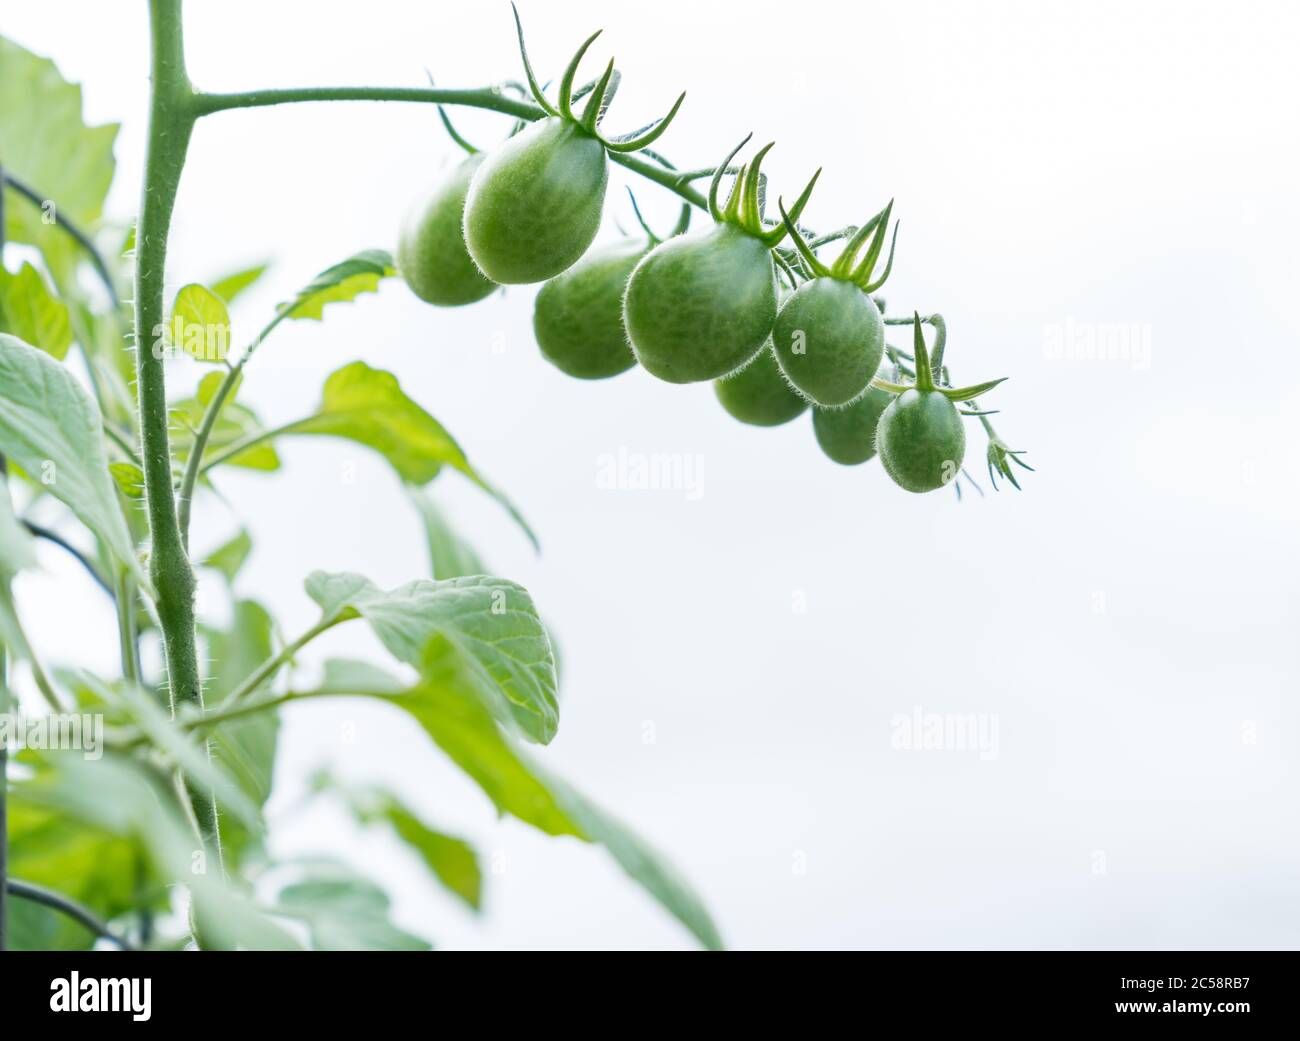 Unripe grape tomato truss hanging on vine Stock Photo